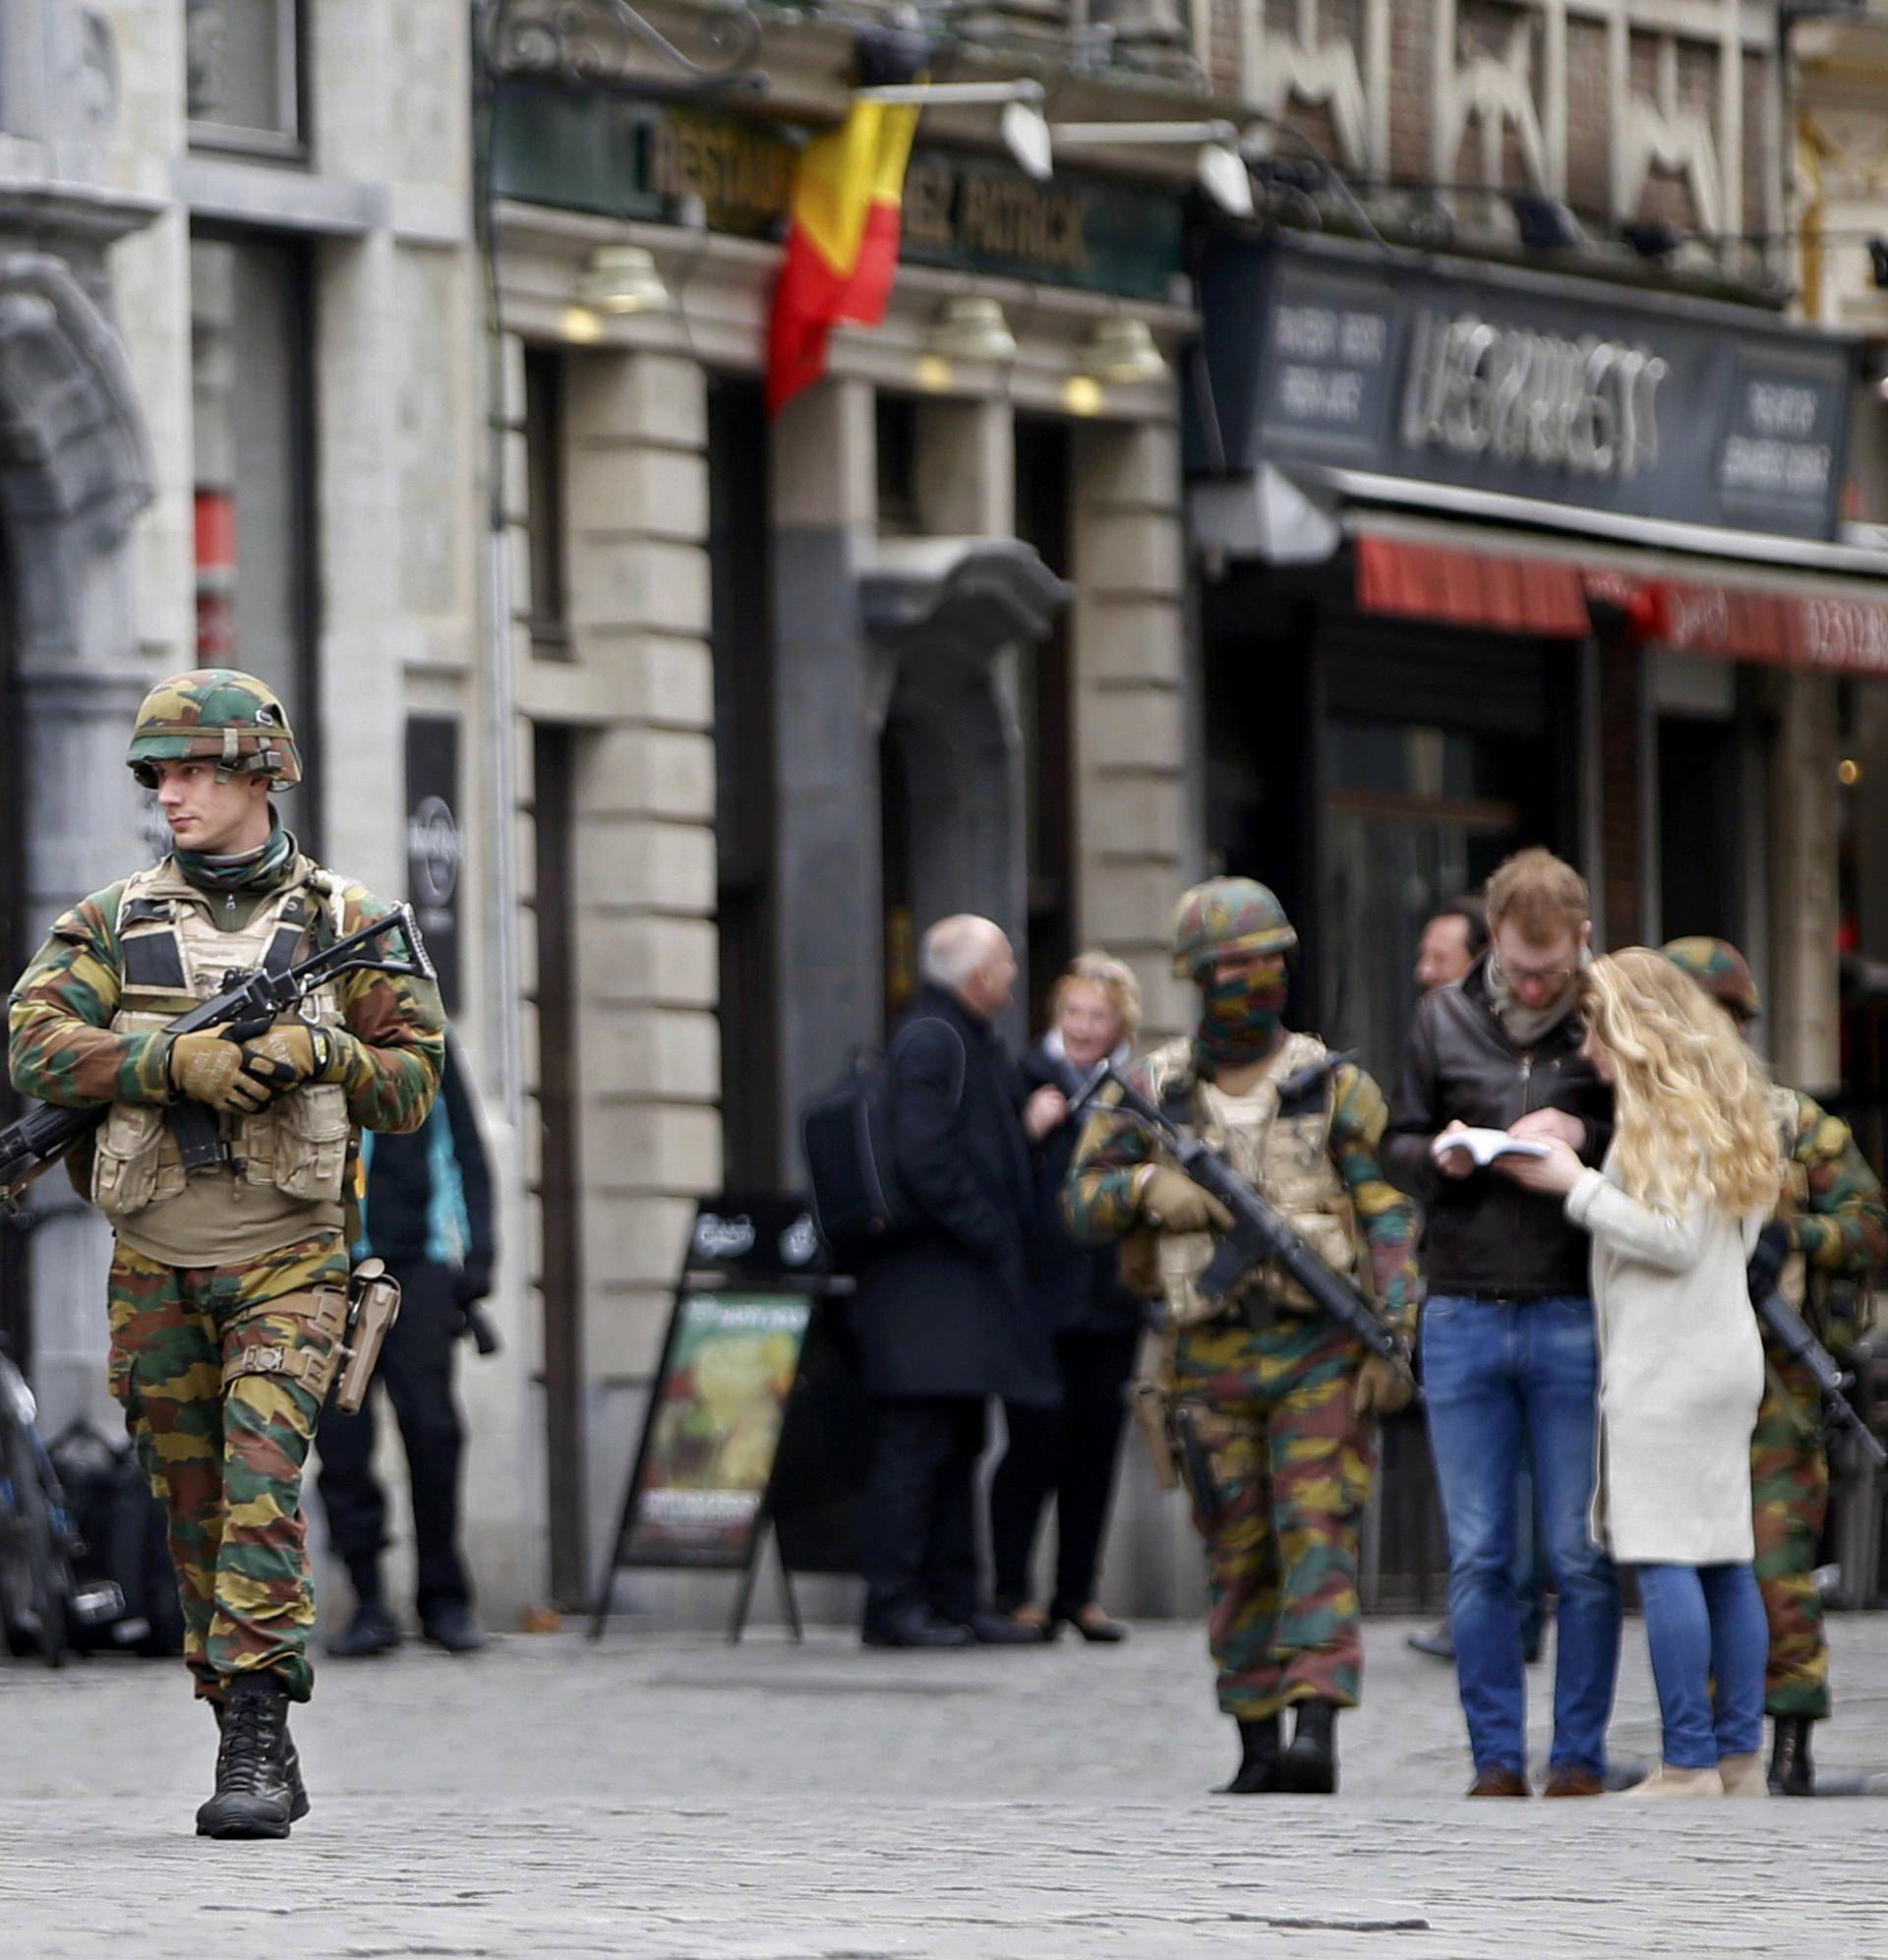 Salah šuti, a DNK bombaša iz Bruxellesa našli u Bataclanu